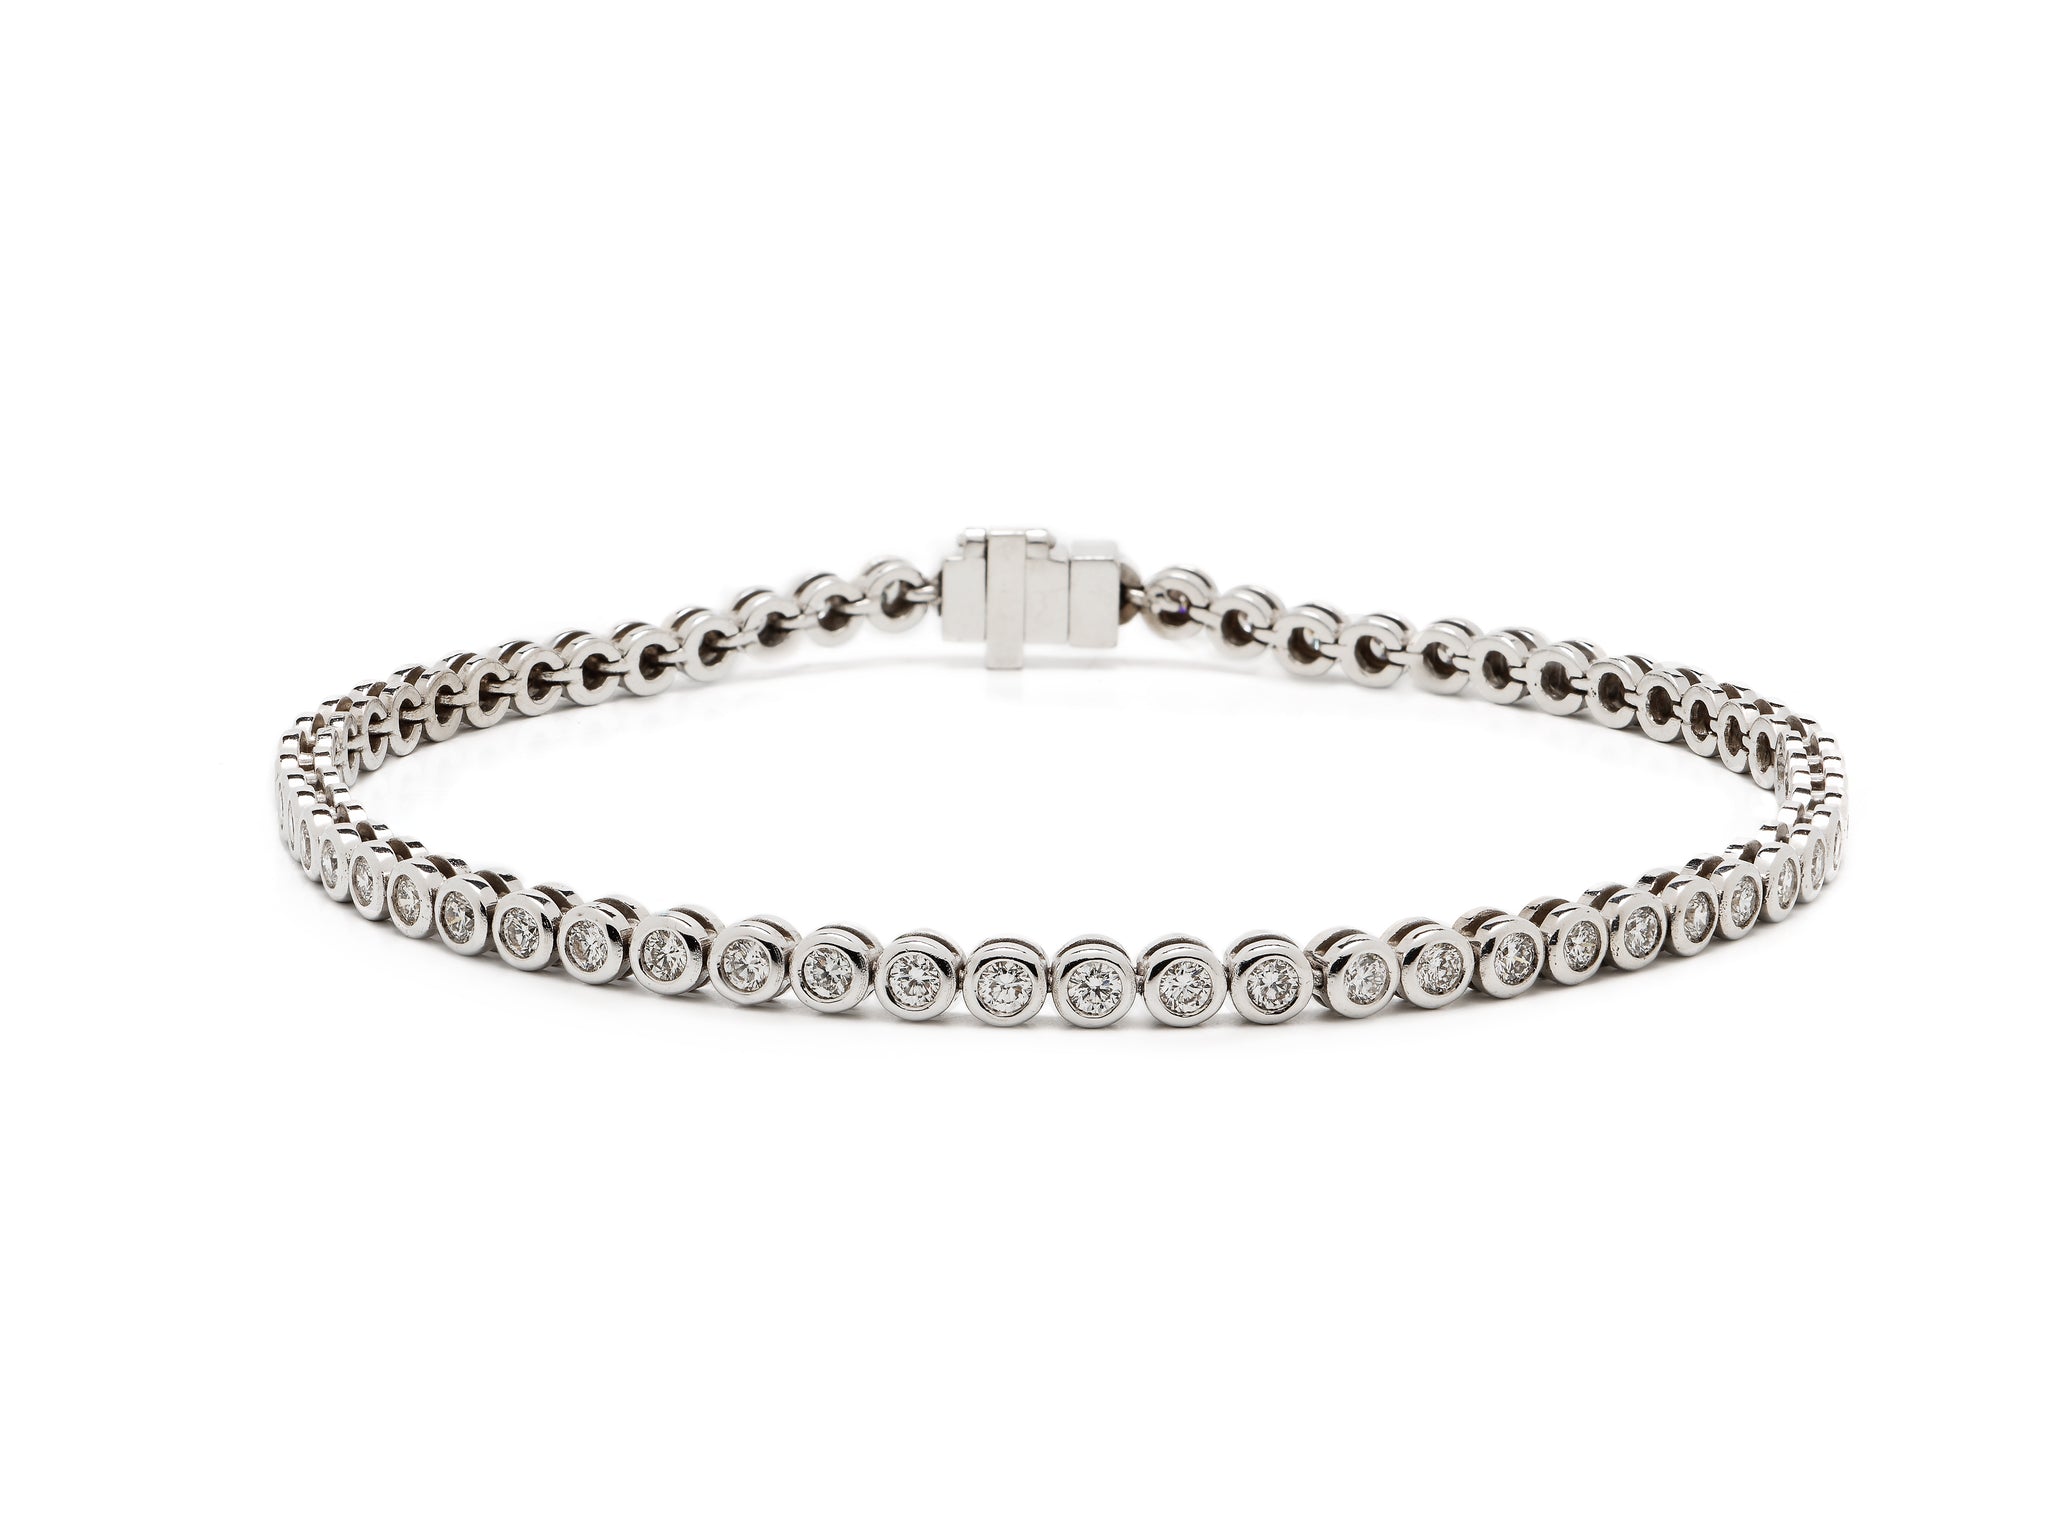 18 krt white gold tennis bracelet set with 60 brilliant diamonds